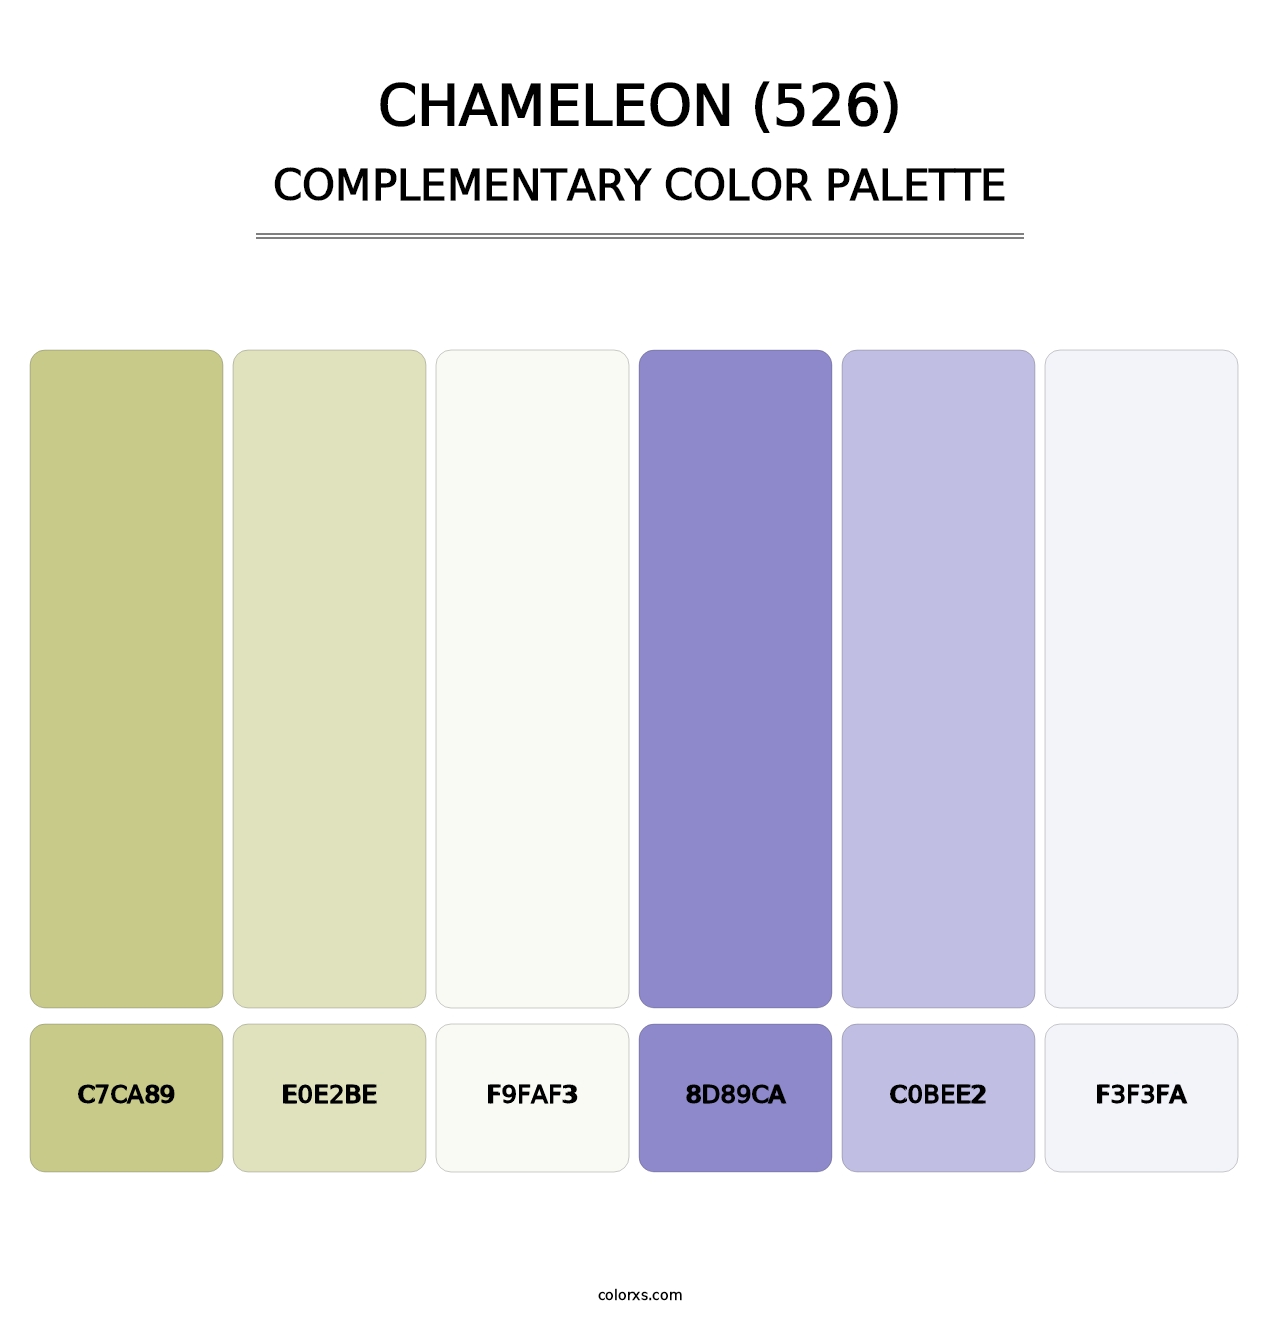 Chameleon (526) - Complementary Color Palette